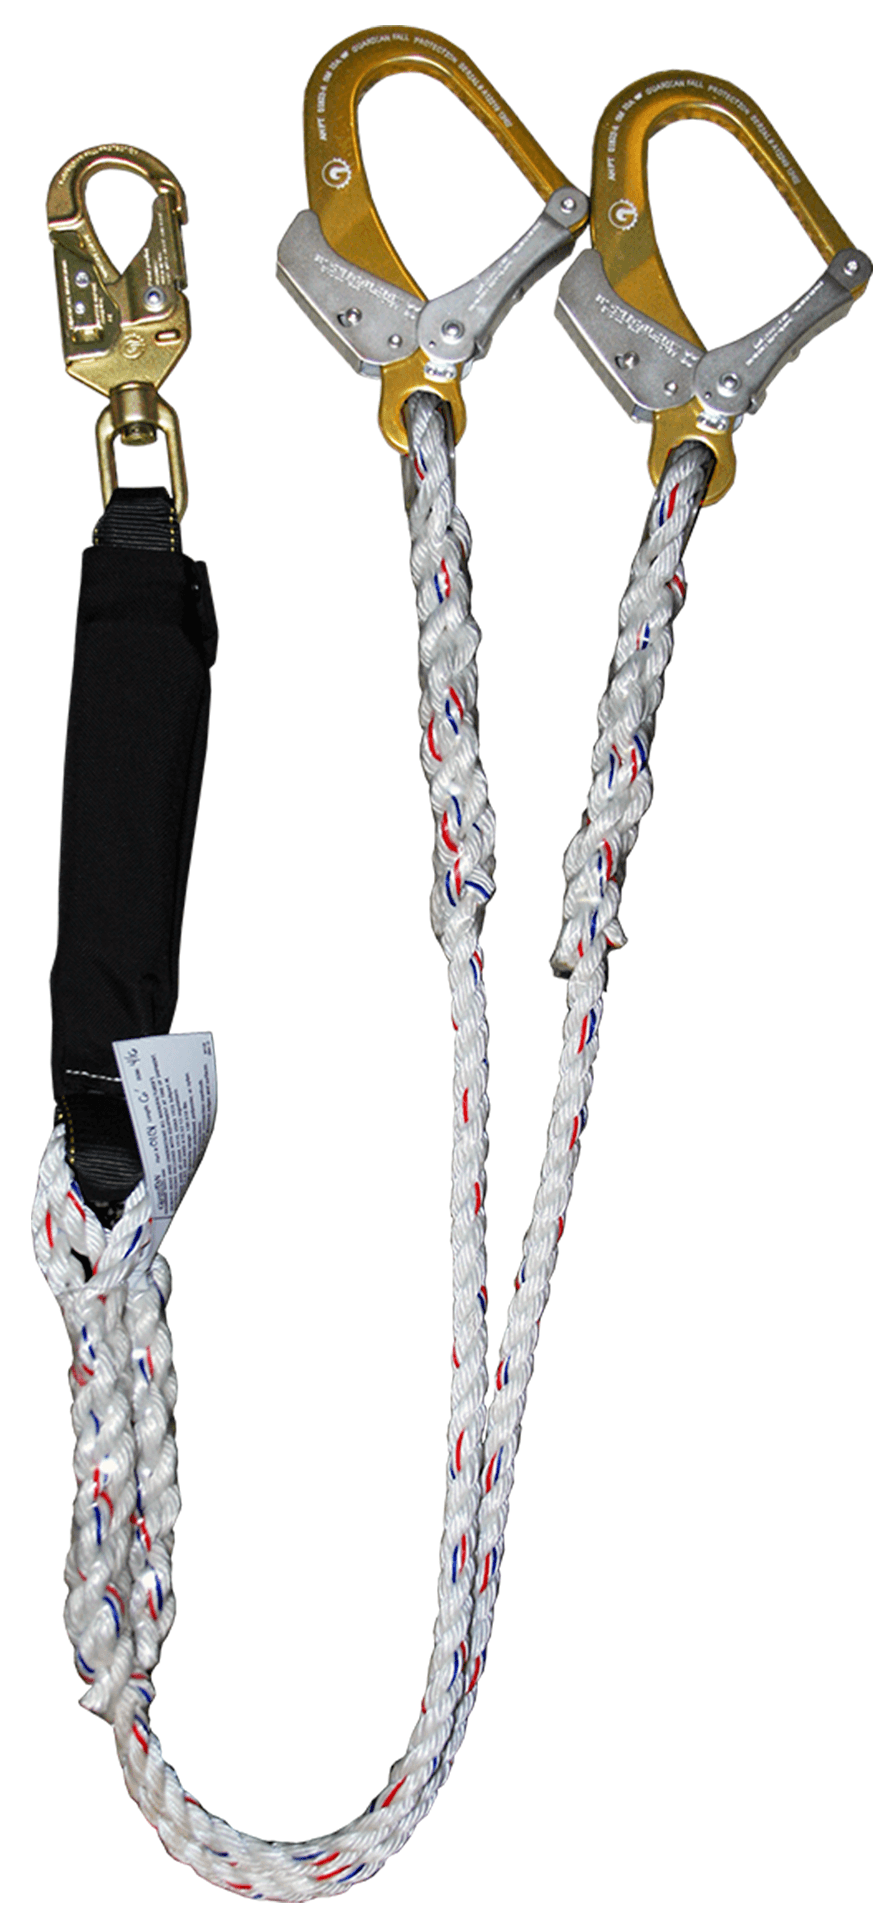 https://www.engineeredfallprotection.com/store/images/thumbs/0000159_guardian-rope-lanyard-6-ft-double-leg-w-aluminum-rebar-hooks-snap-hook-01131.png